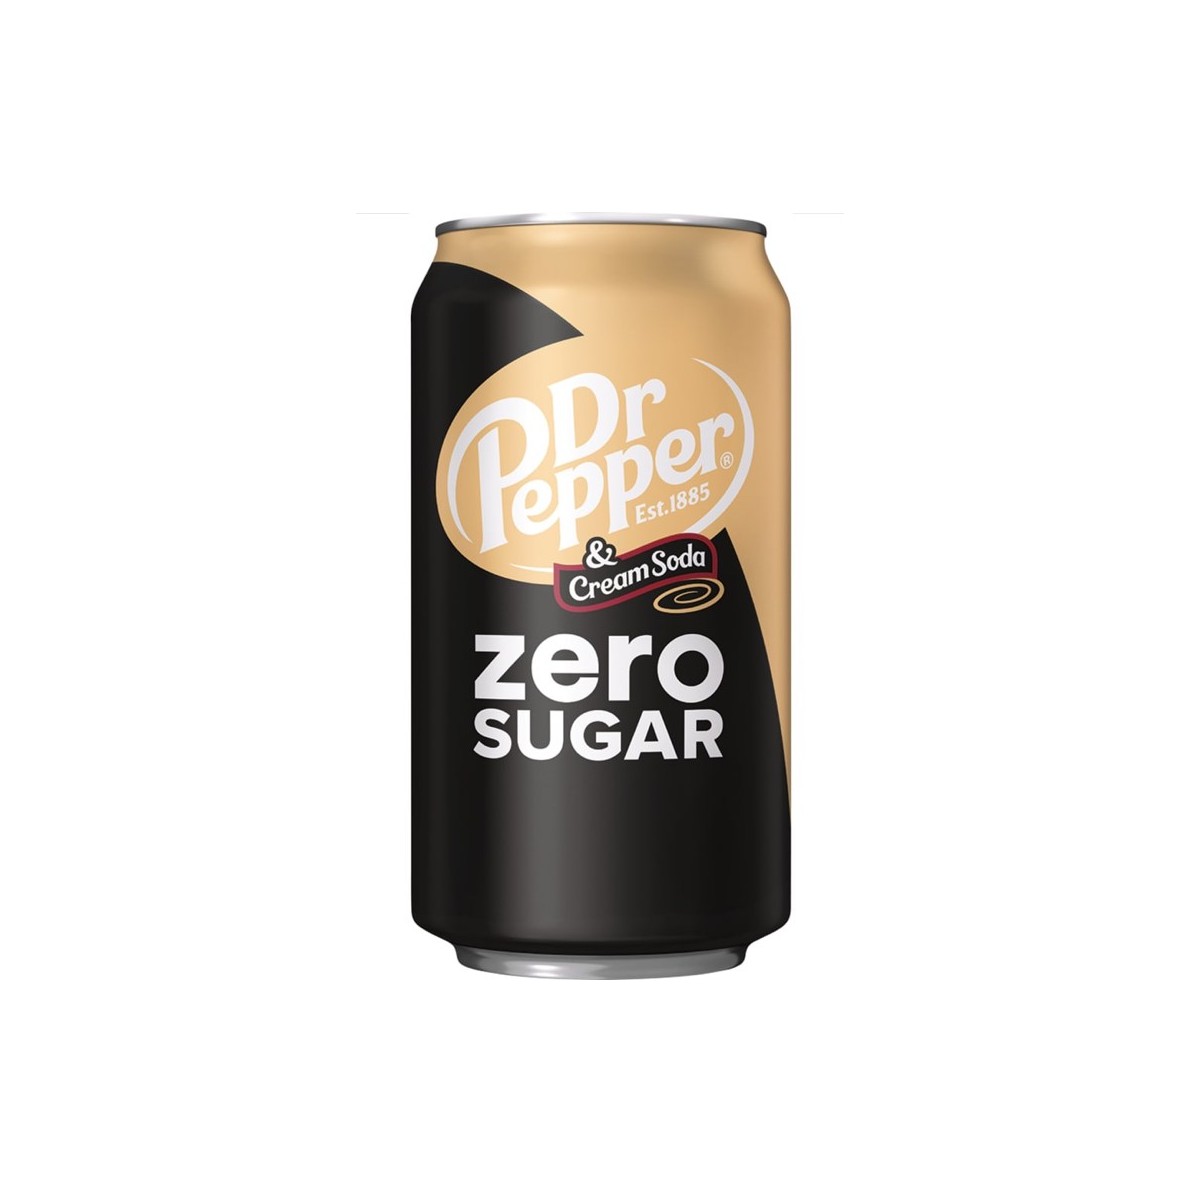 Pepper cream. Dr Pepper Zero Sugar. Безалкогольный газированный напиток a&w Cream Soda 355 мл EAN USA.